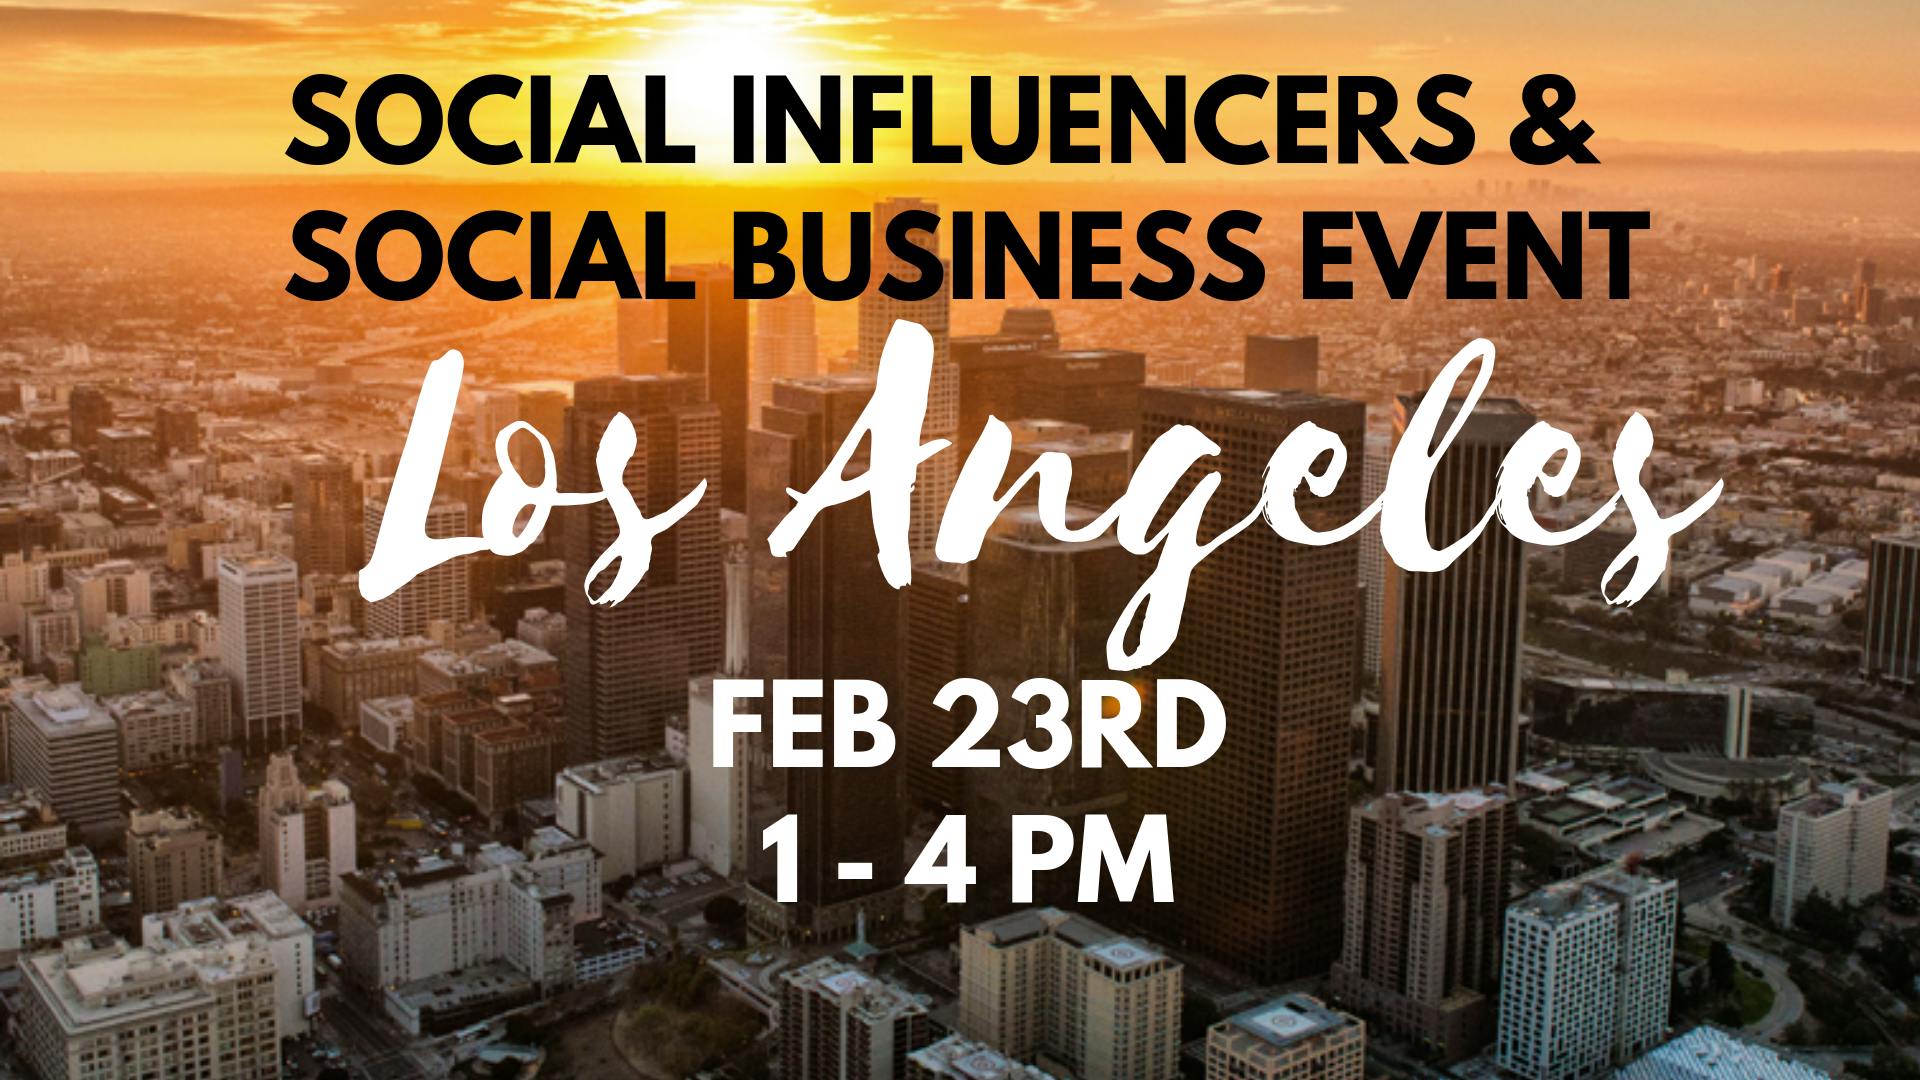 Social Influencers & OTG Social Business Event